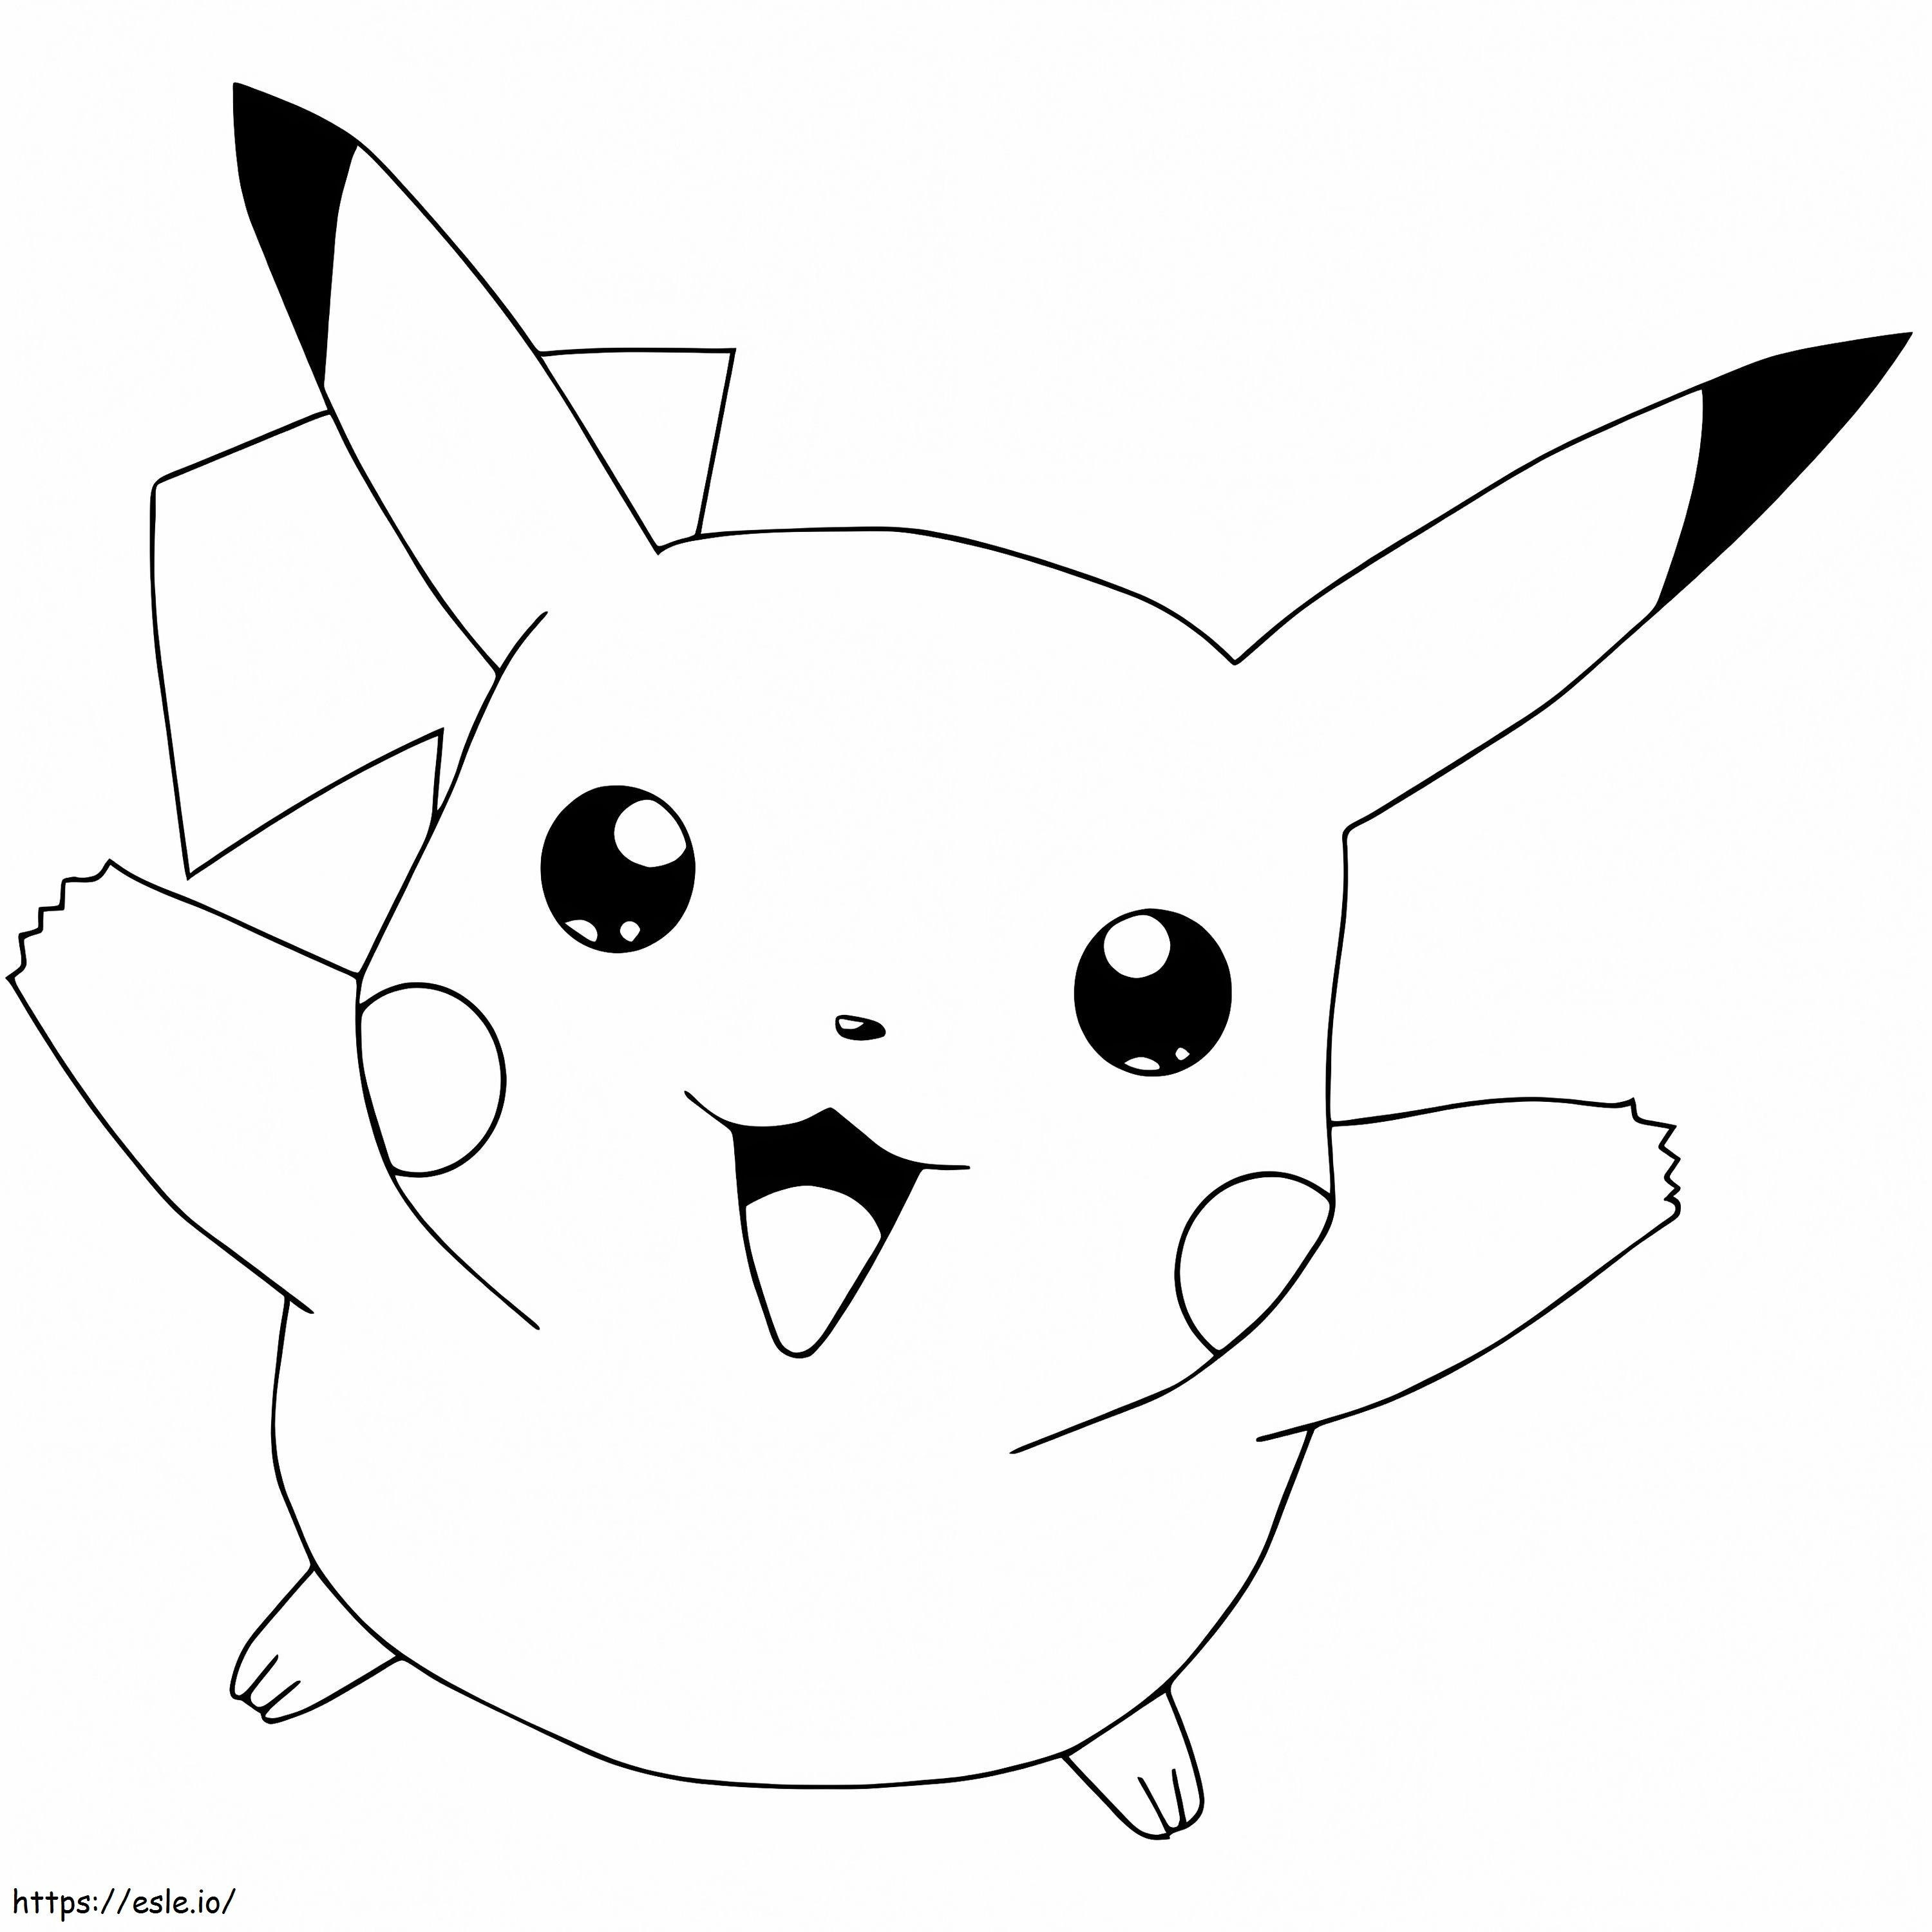 Coloriage Pikachu simple à imprimer dessin